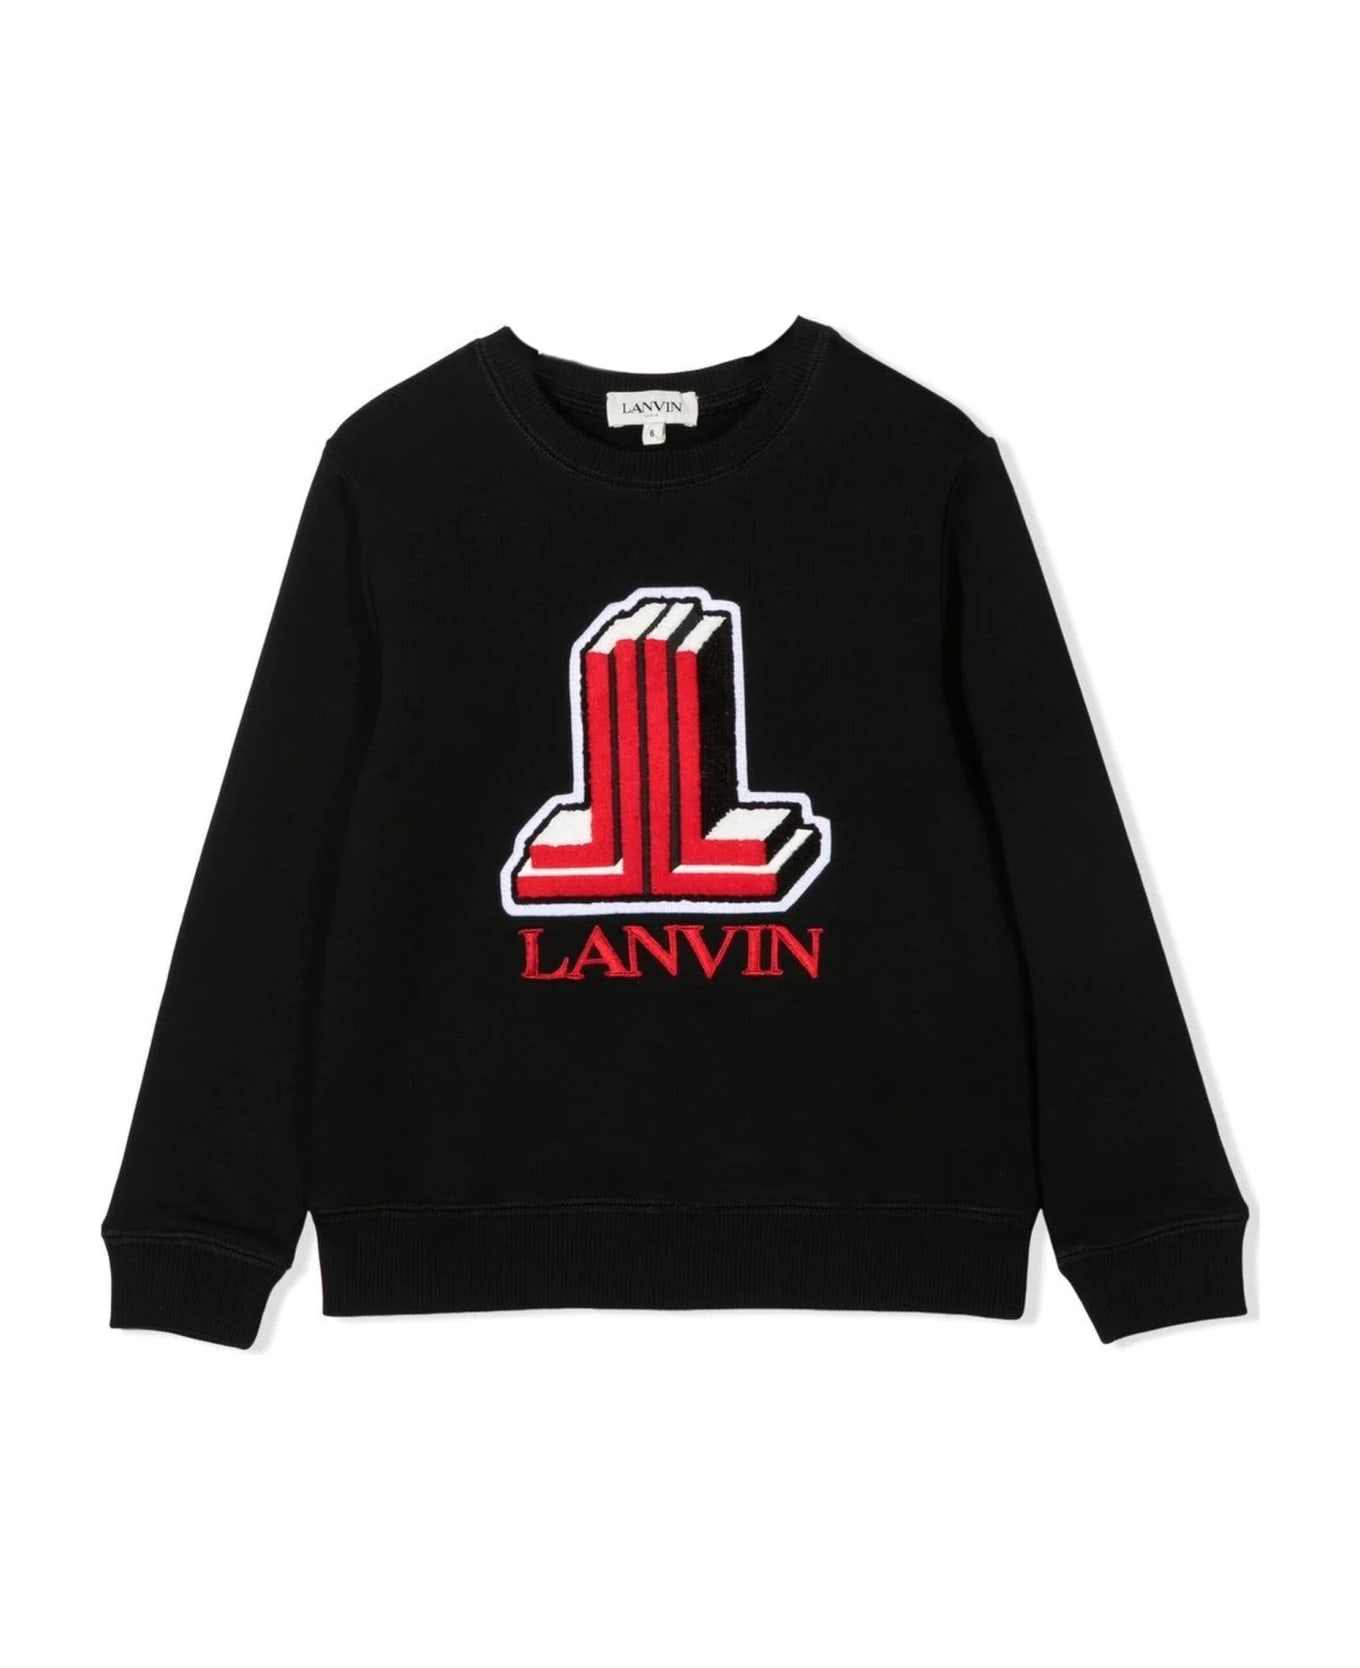 Lanvin Black bust Sweatshirt - Nero